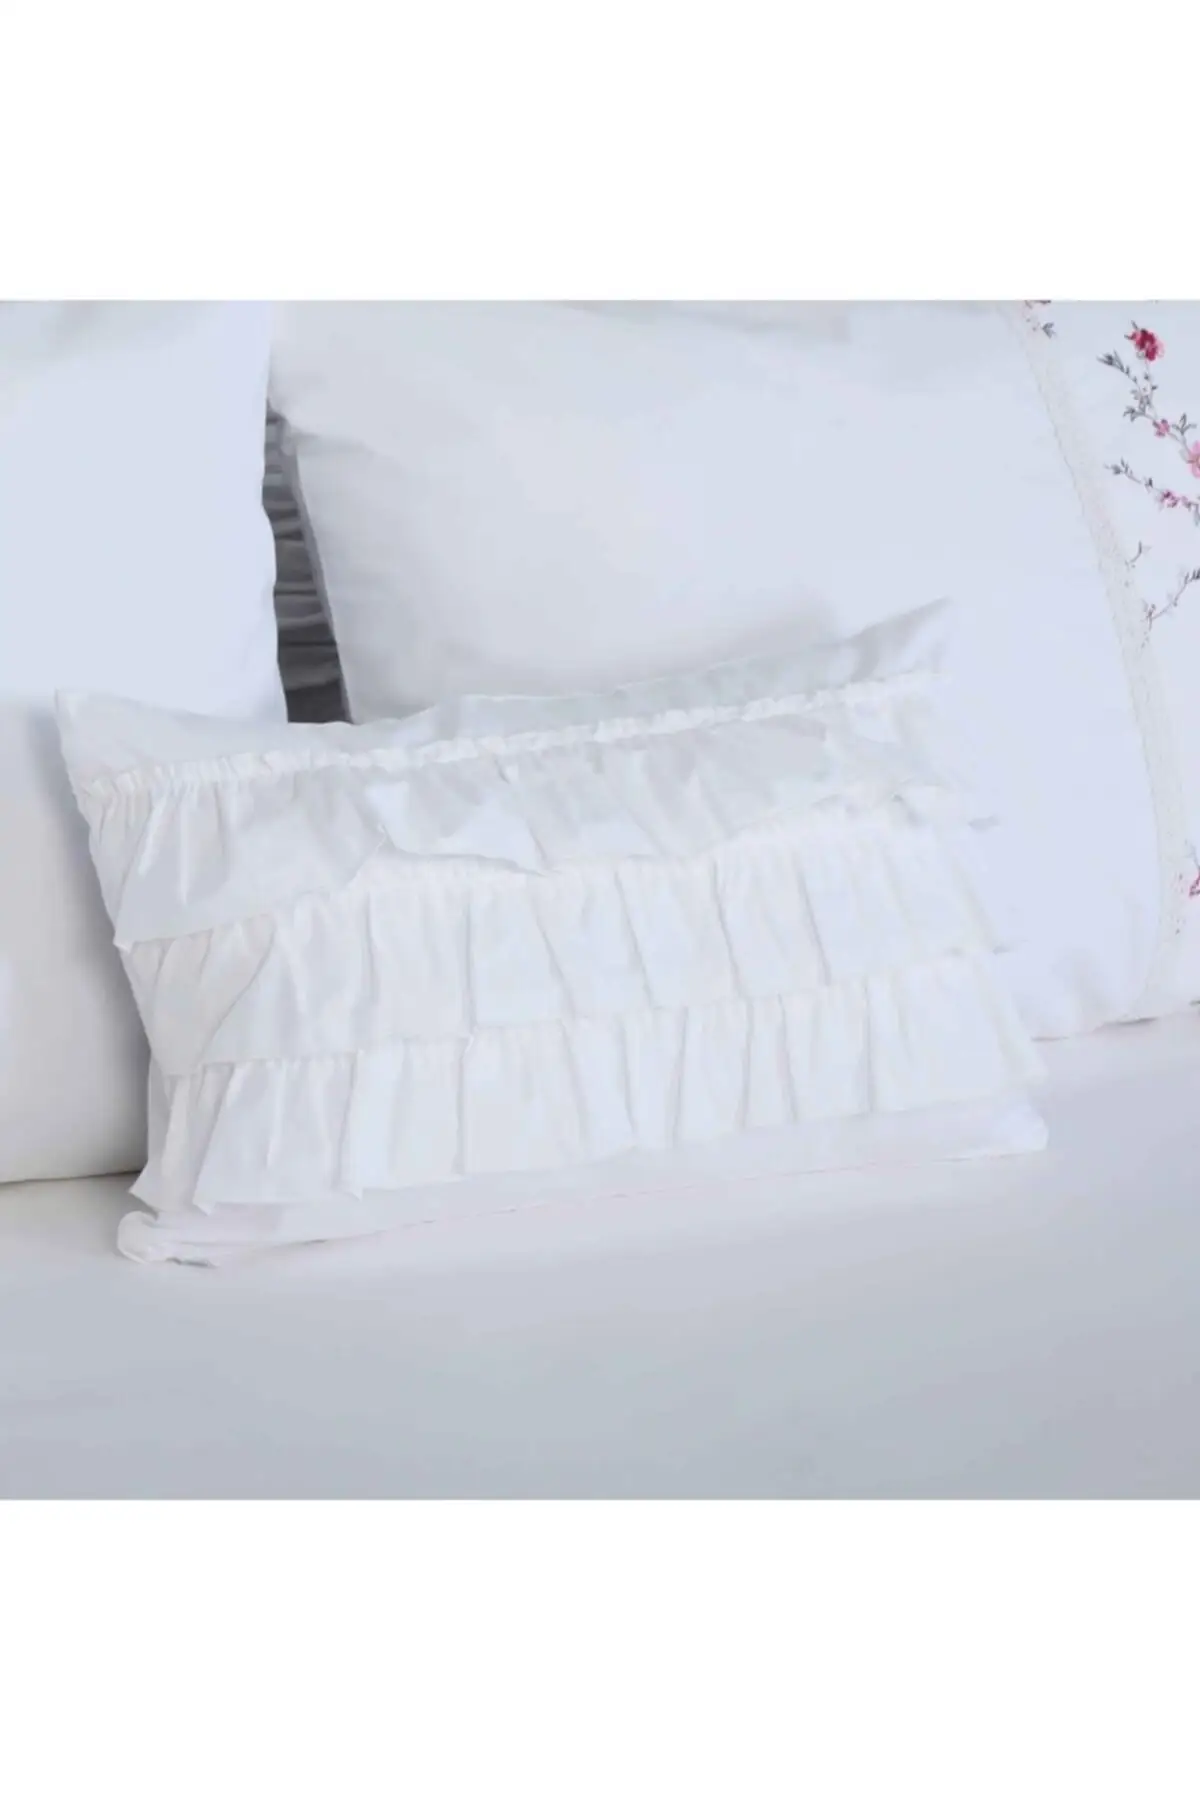 

Cotton 2 Pillow Case, white, yk-86 Cotton-Polyester 30x50 Case Pillow & Pillow Bedroom Textile Home & Furniture